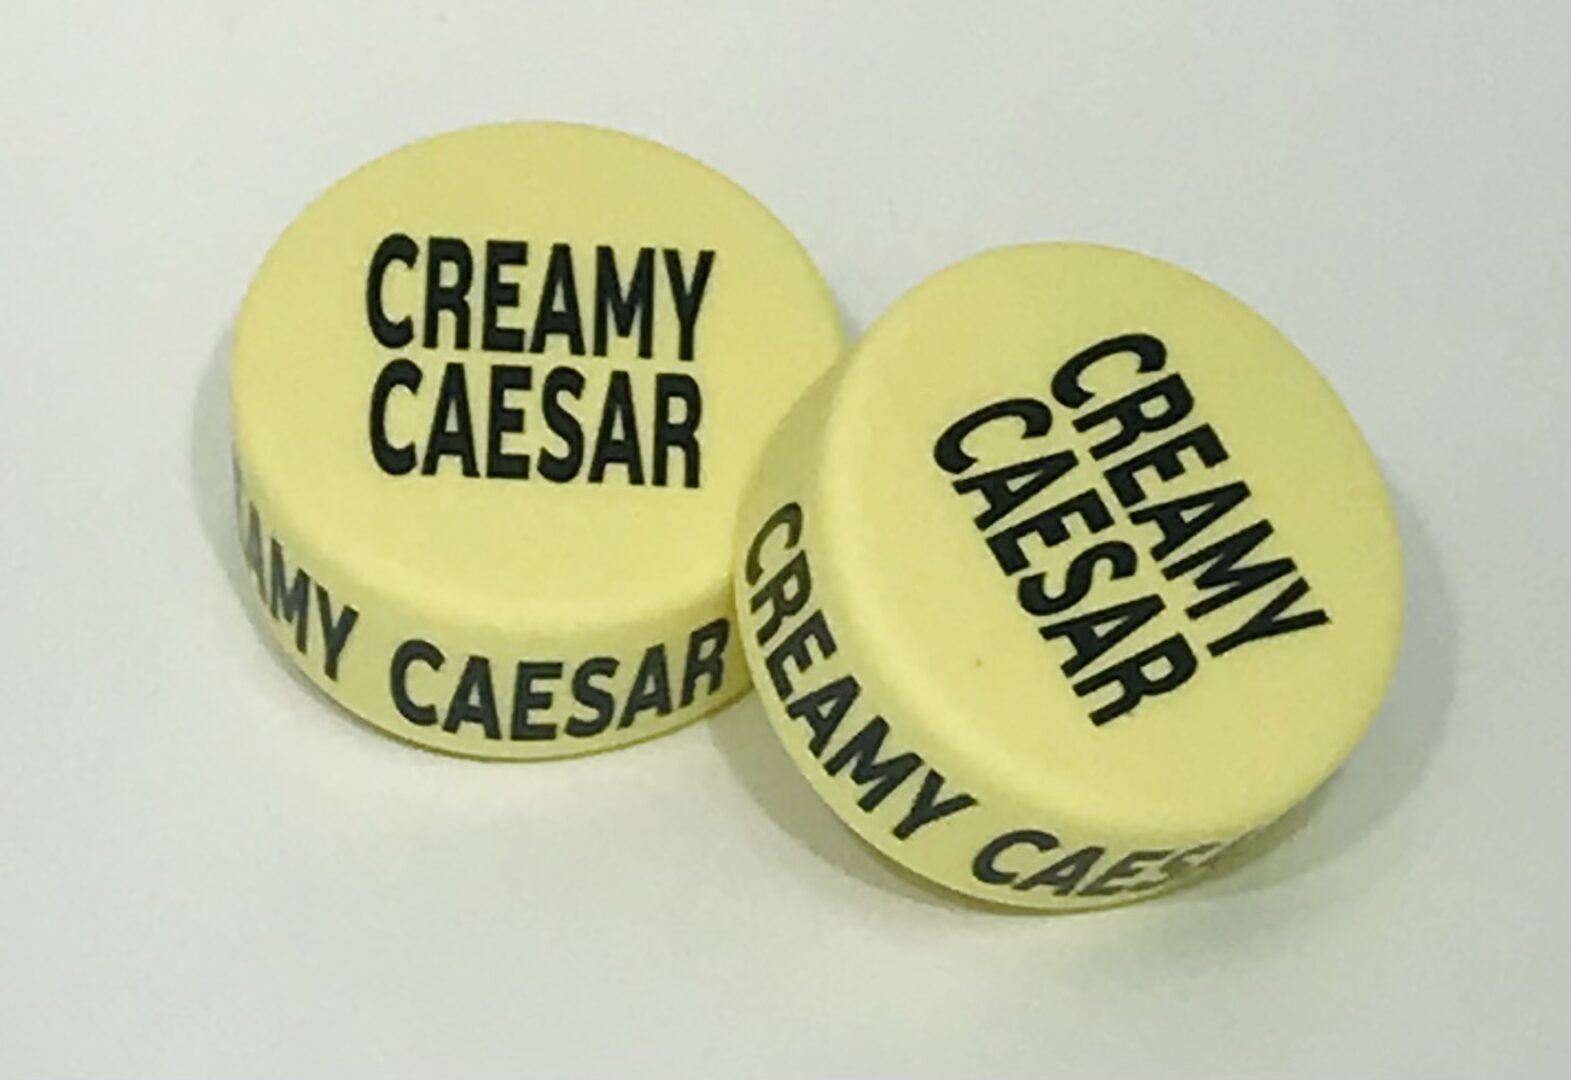 Creamy Caesar